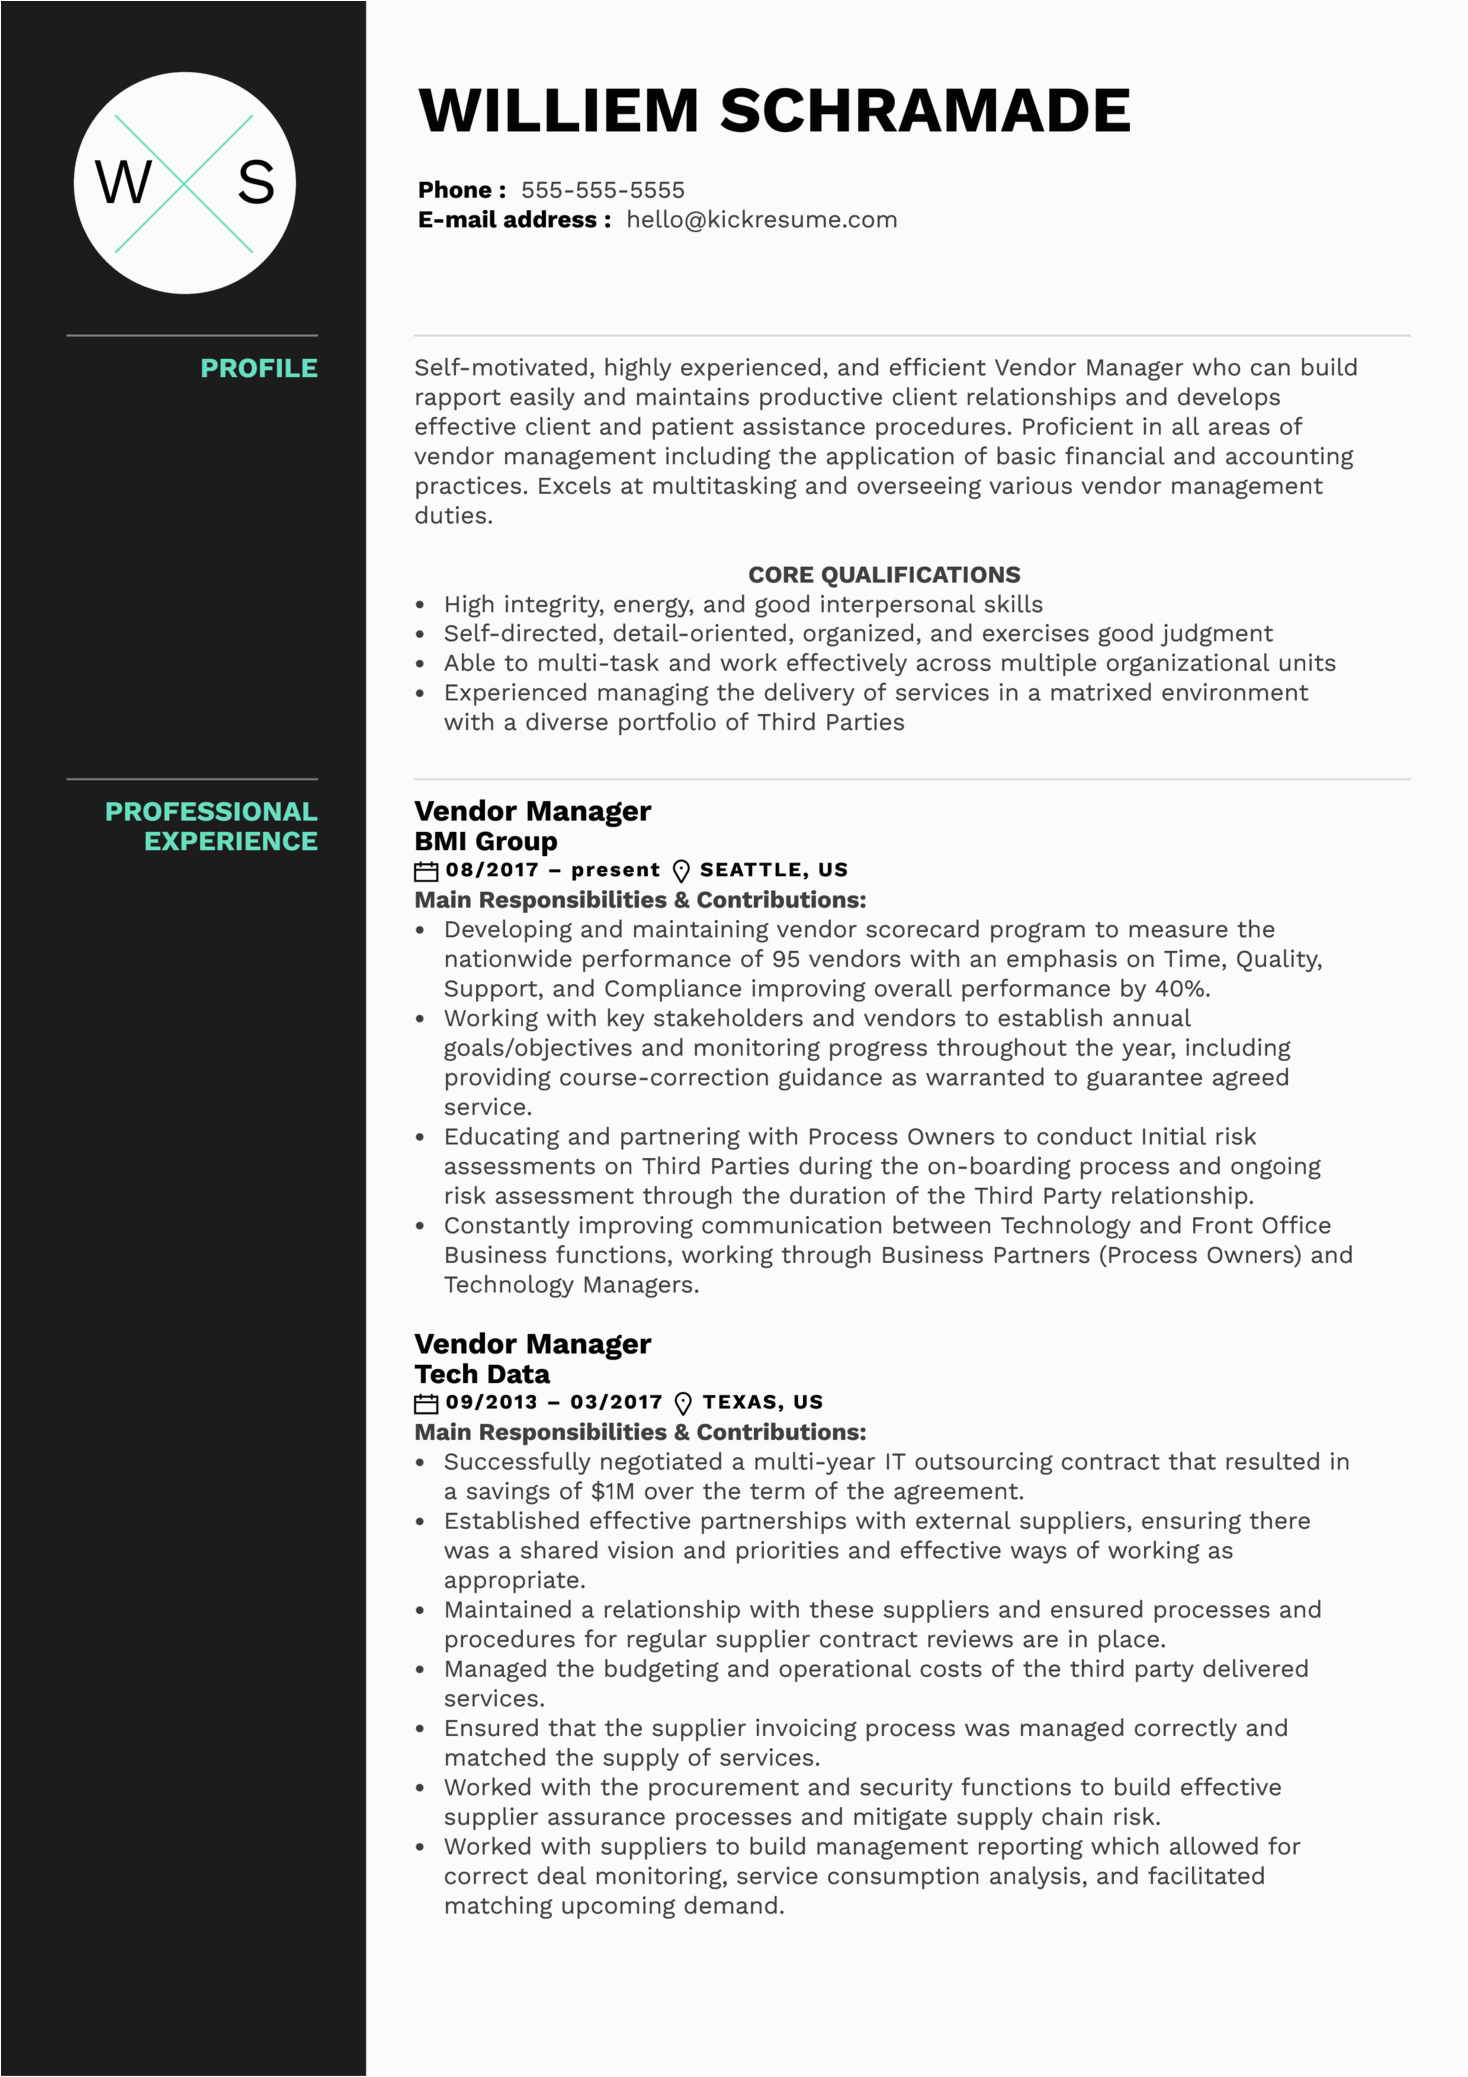 Sample Resume for Vendor Development Manager Vendor Manager Resume Sample